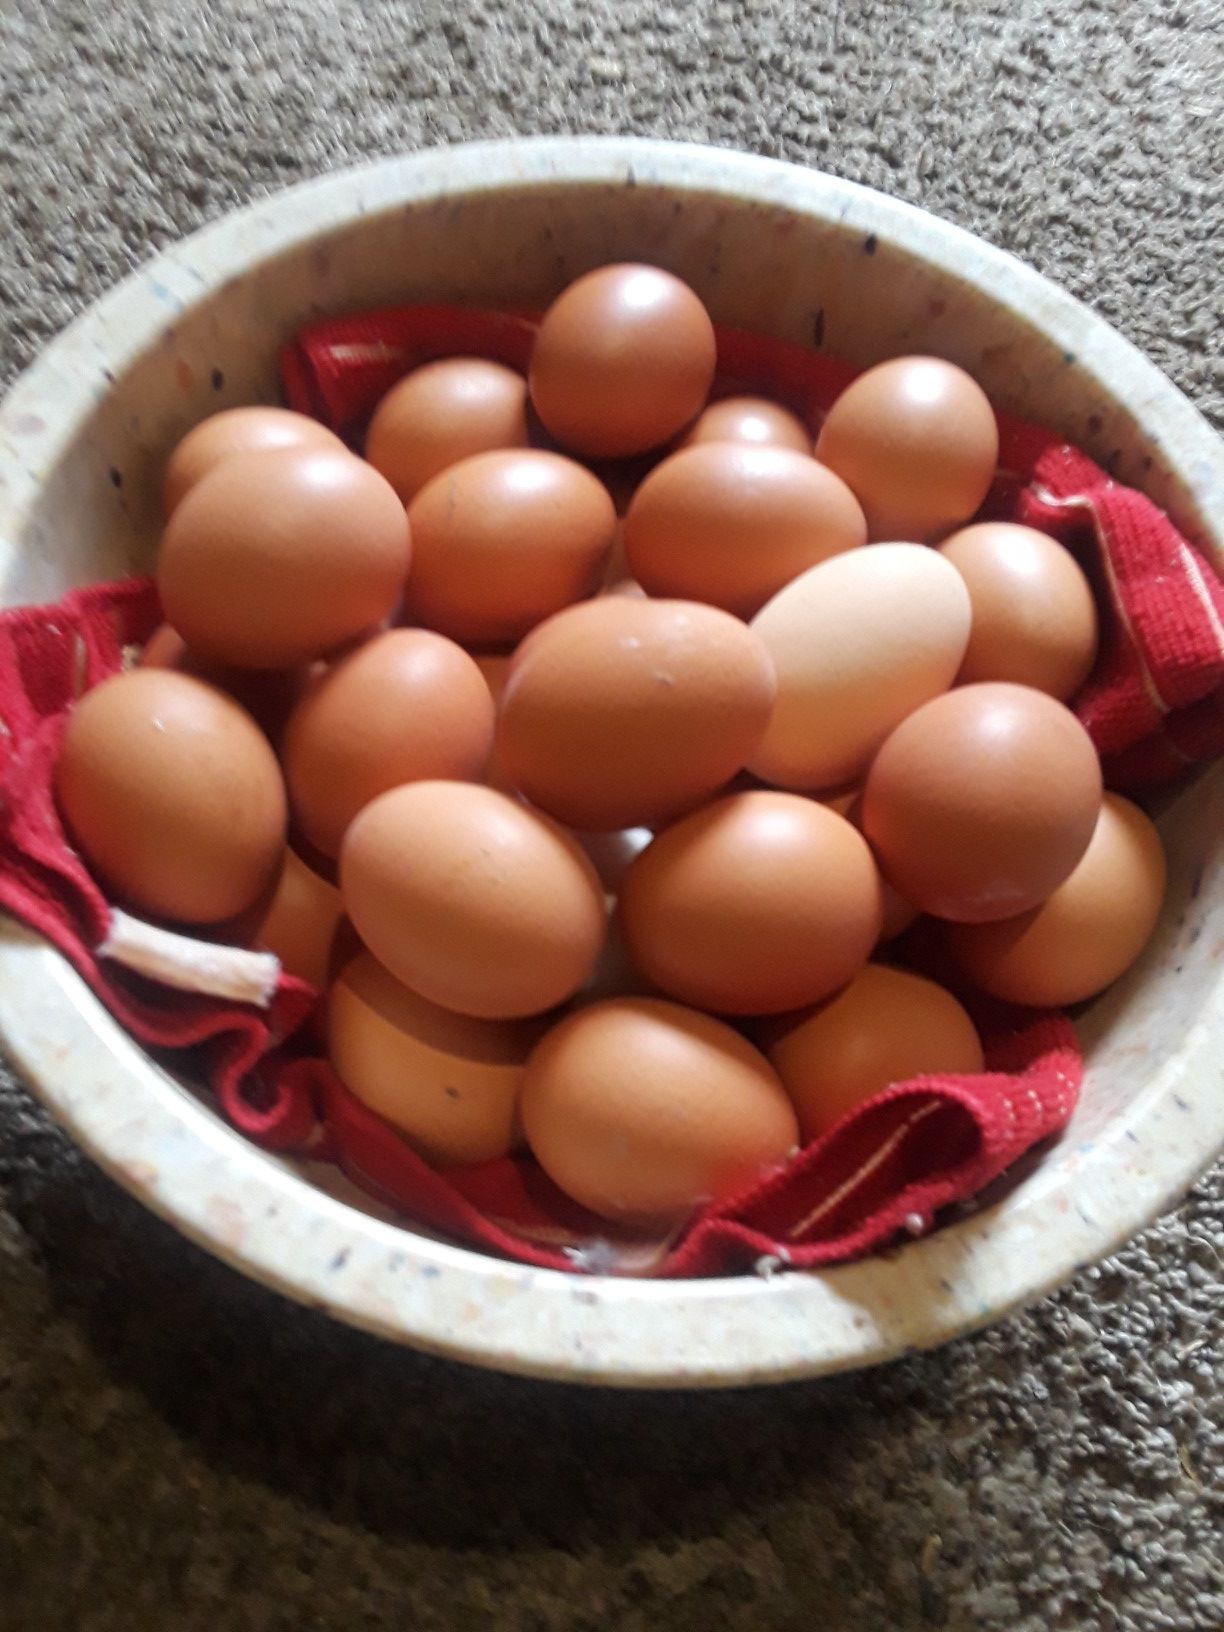 Farm Fresh free range organic chicken eggs